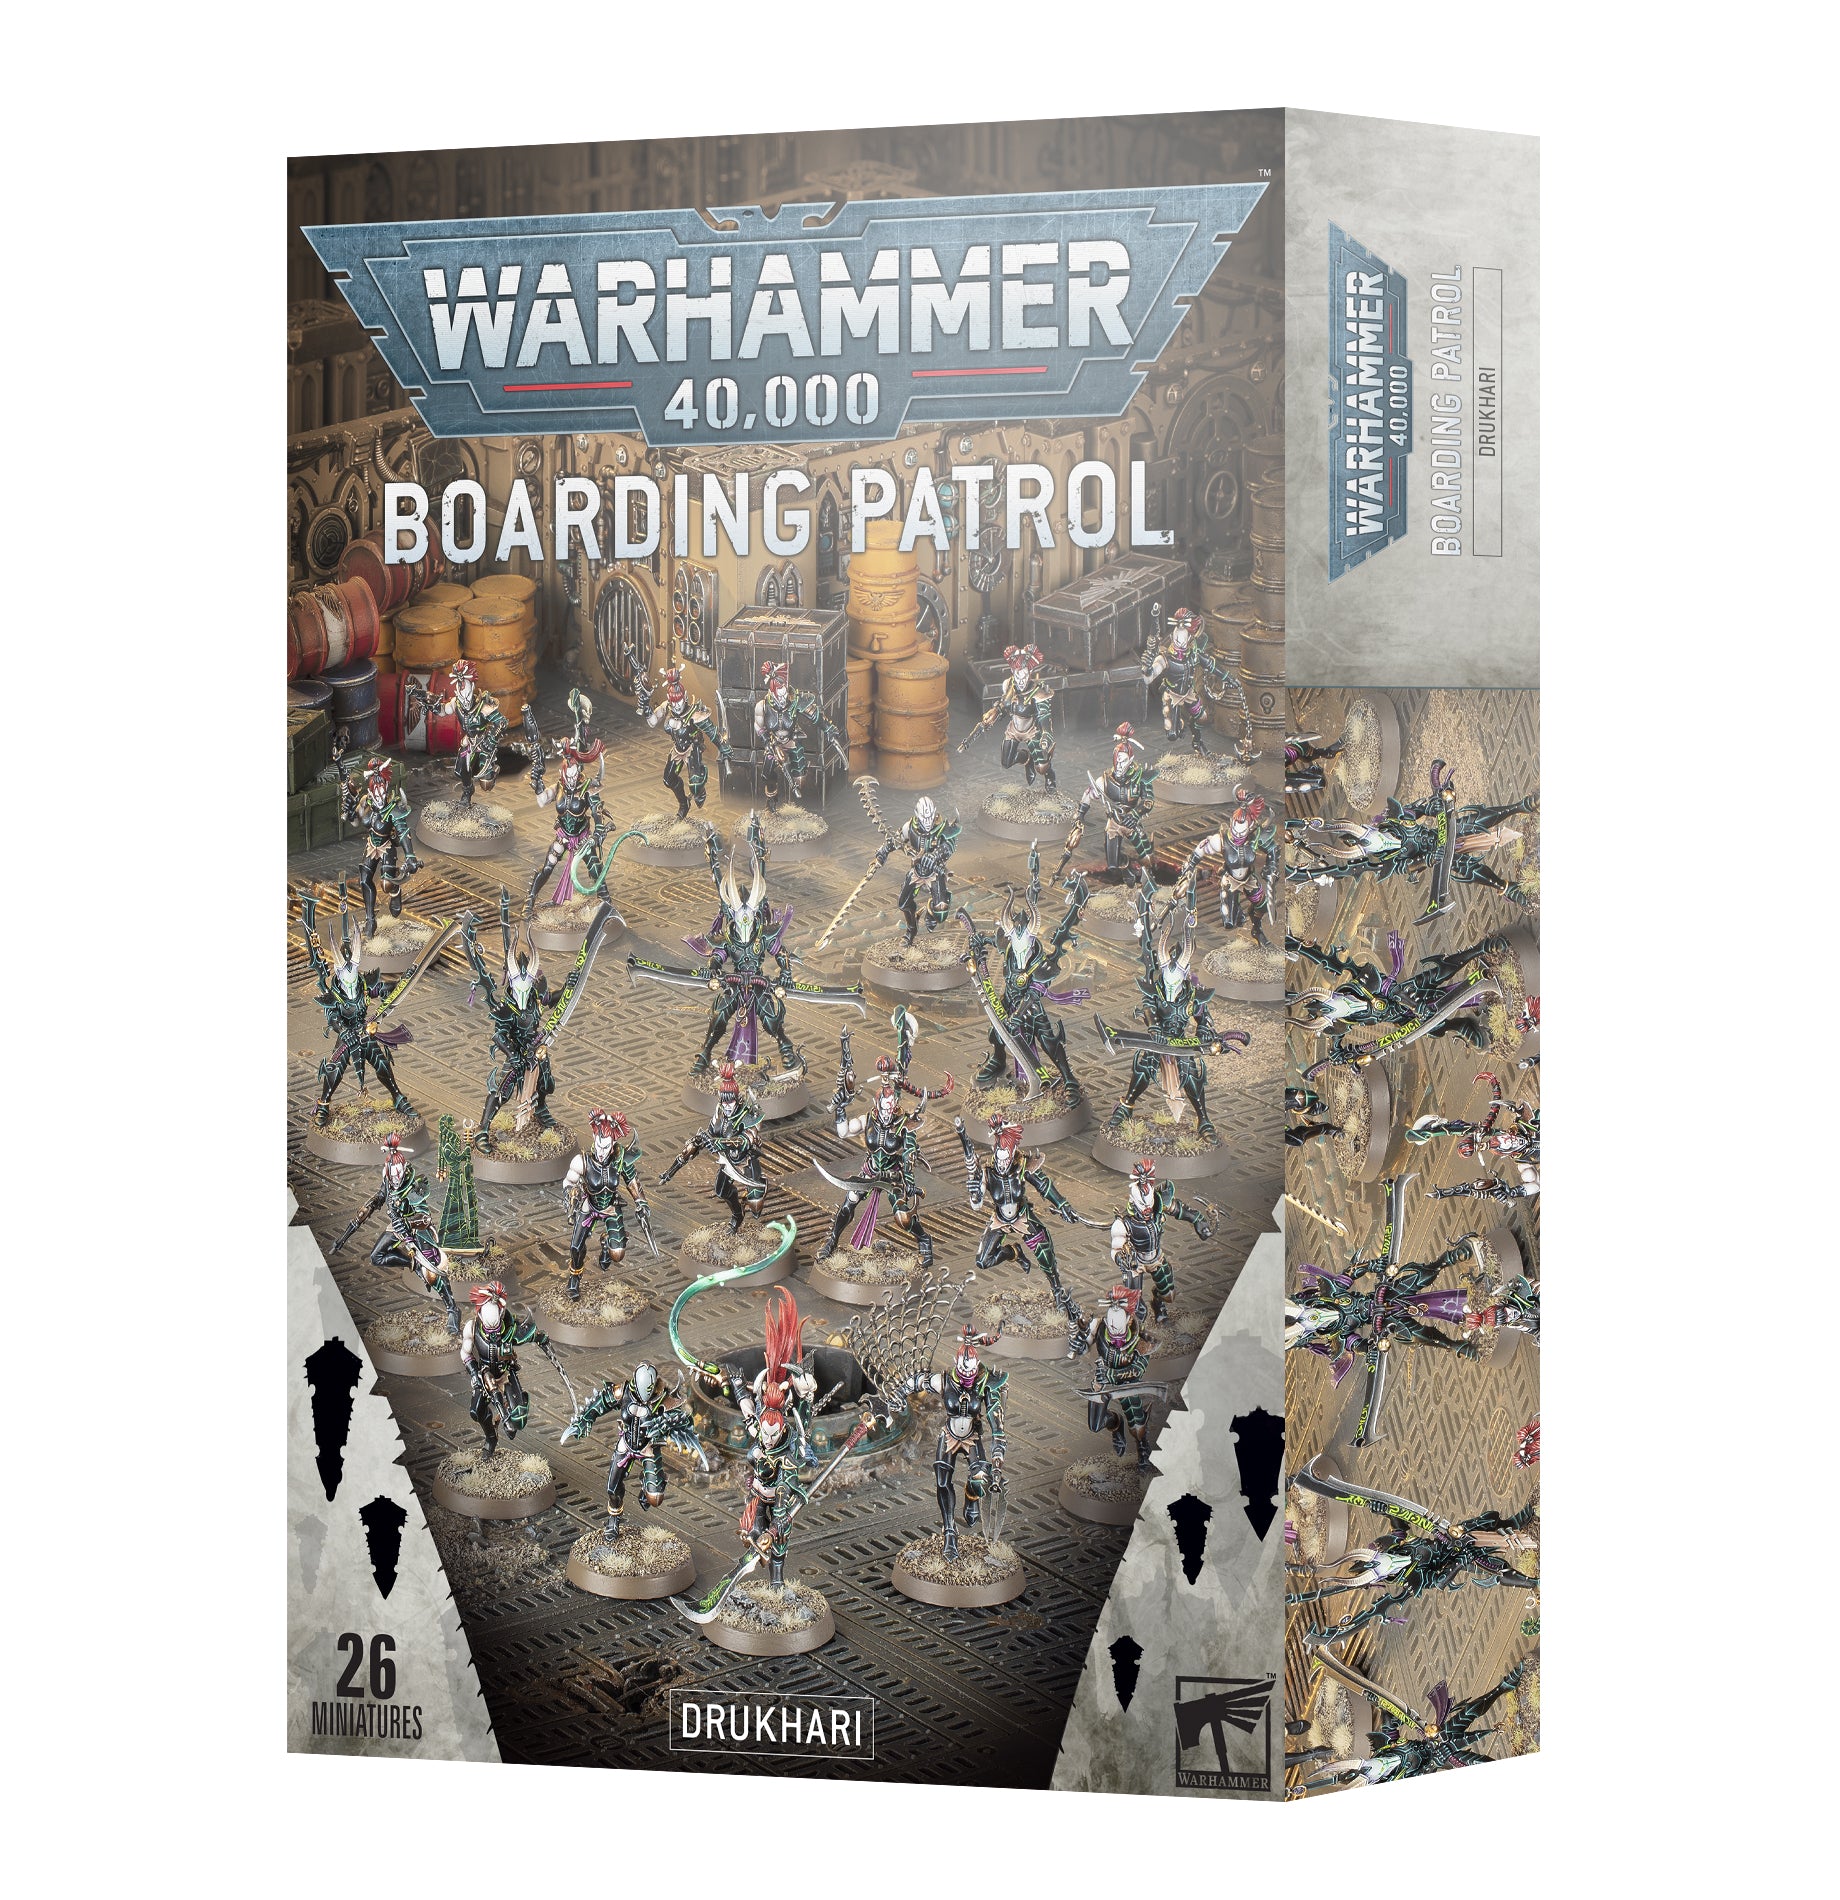 Warhammer 40,000: Boarding Patrol - Drukhari